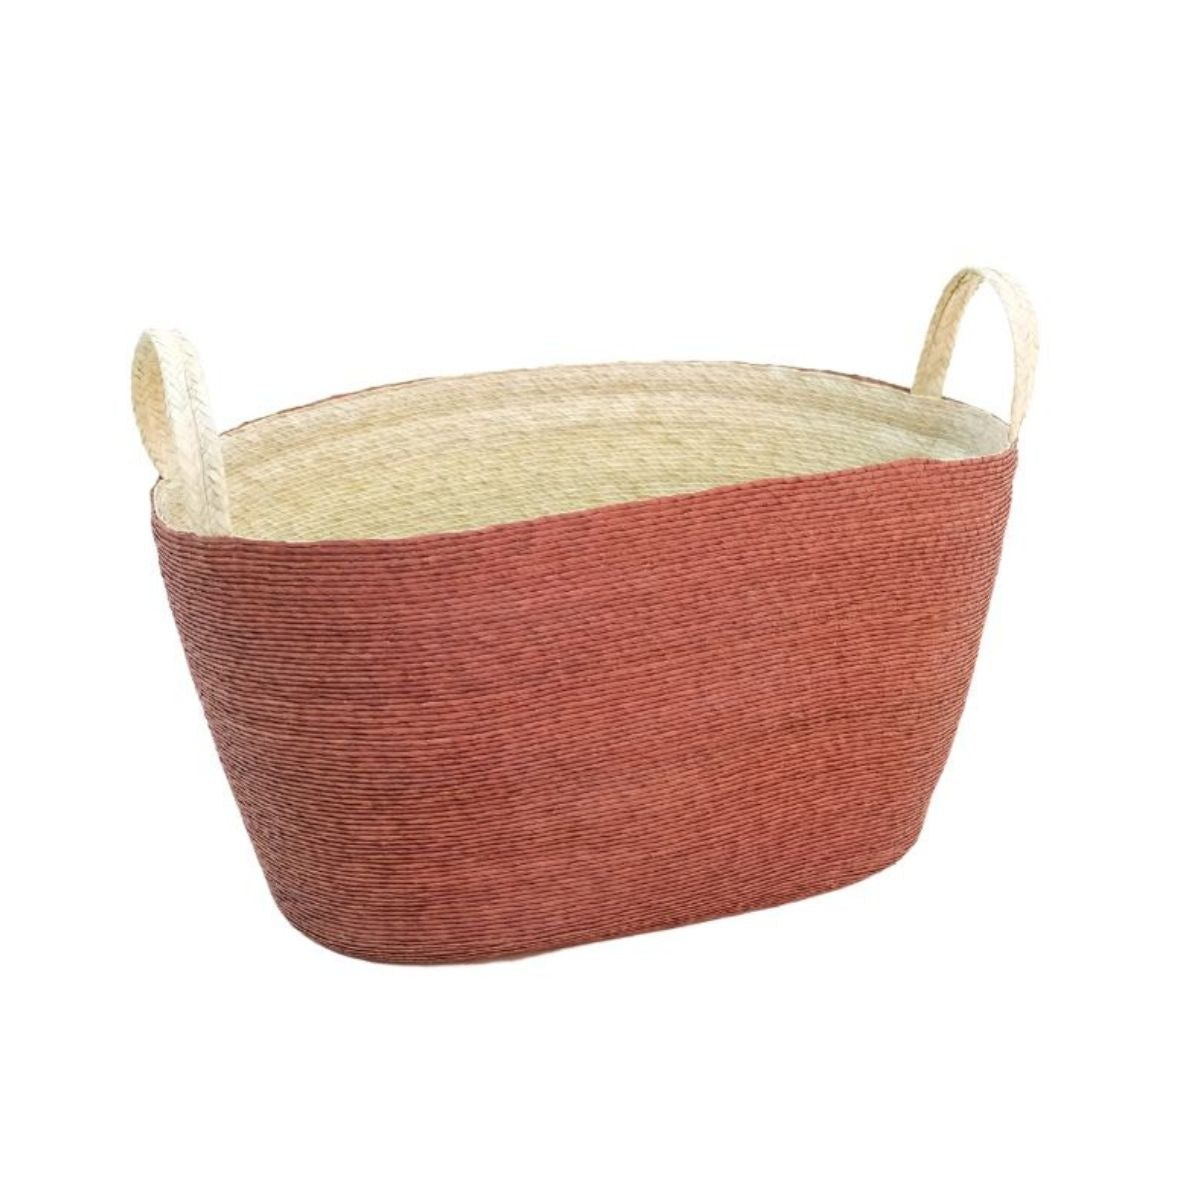 Handmade Oval Floor Basket with Handles in Ladrillo Wine